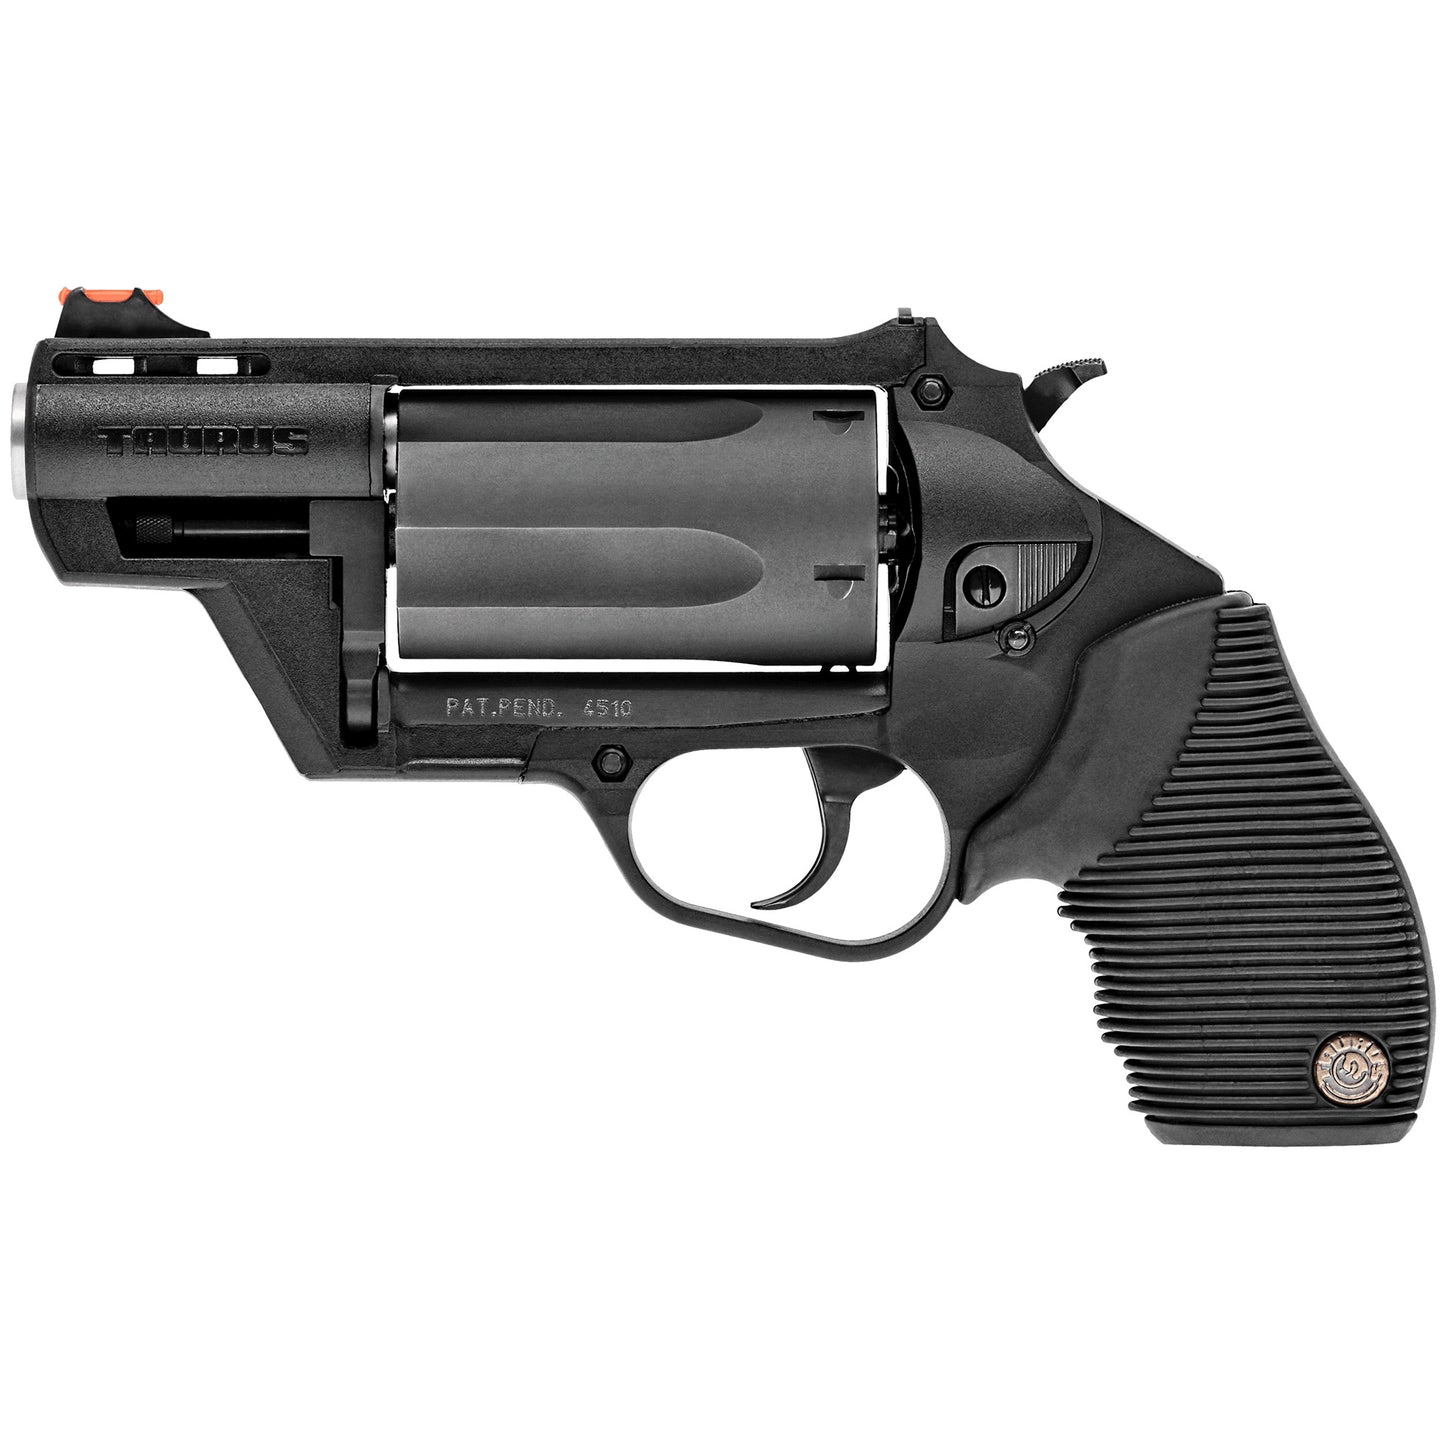 Taurus, Judge, Public Defender, Double Action, Polymer Frame Revolver, Medium Frame, 410 Bore/45LC, 2.5" Barrel, 2.5" Chamber, Black, Rubber Grips, Fiber Optic Front Sight, 5 Rounds